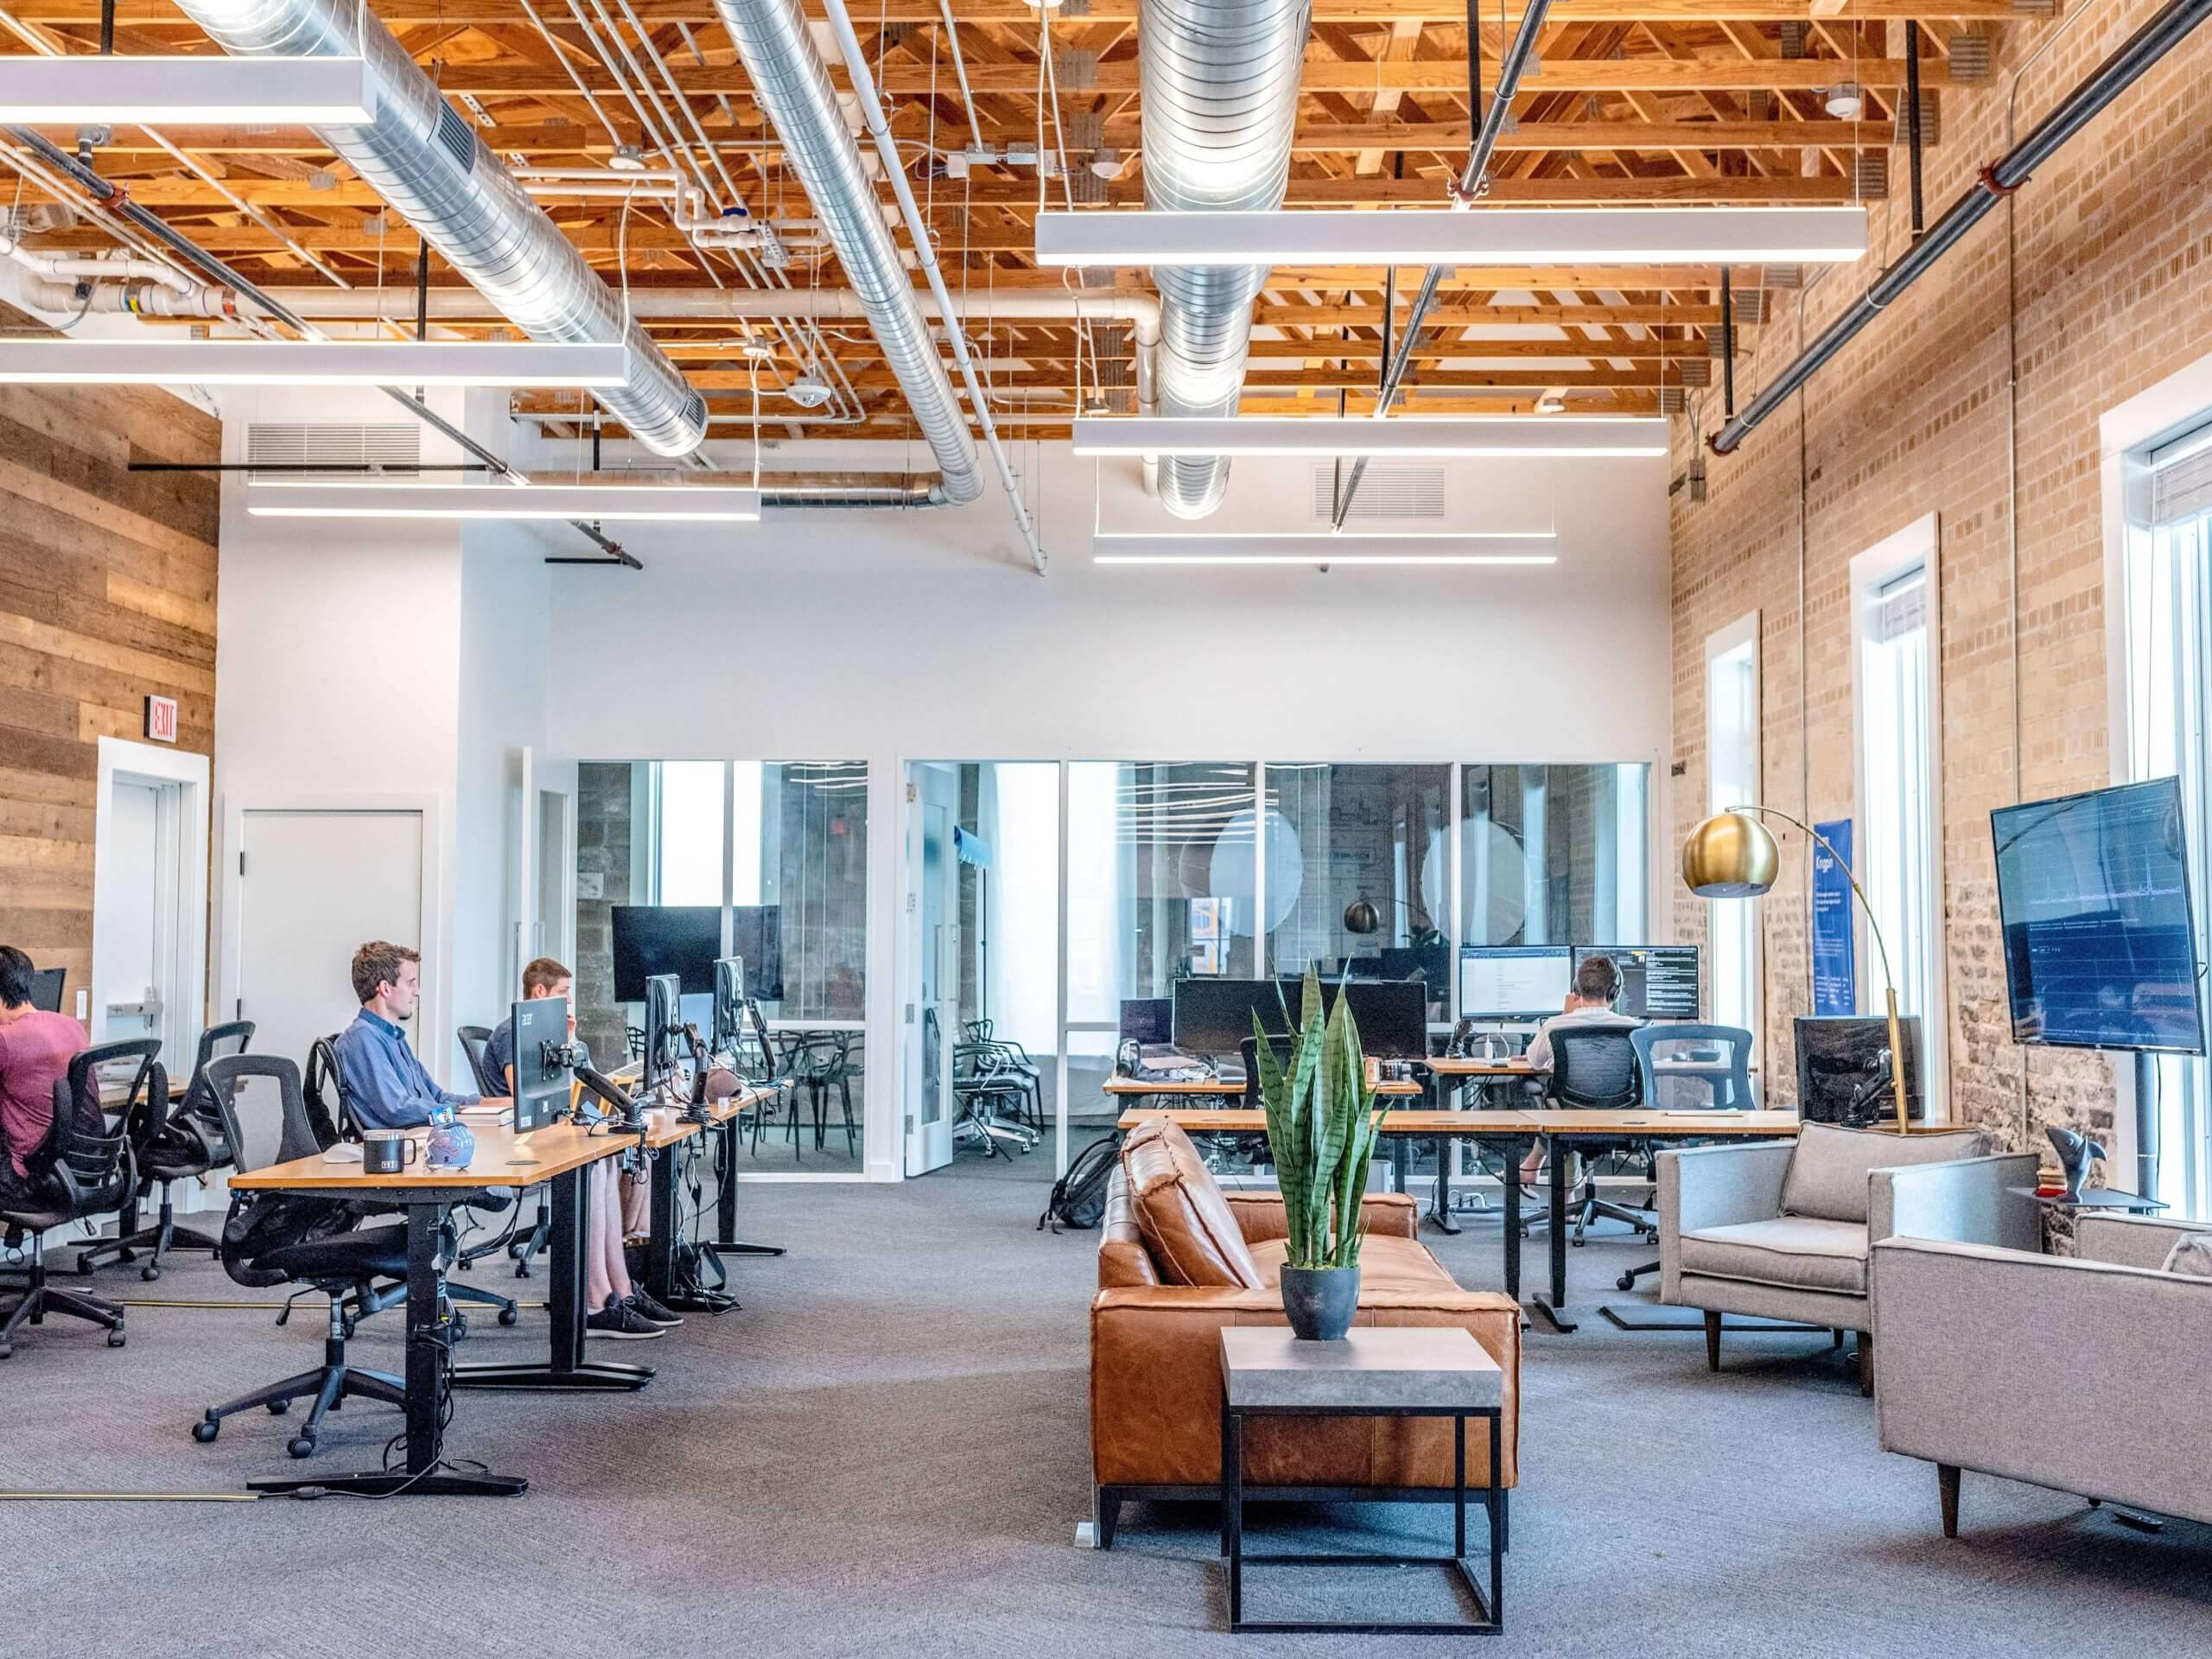 Customer vs client: Inside of an agency office